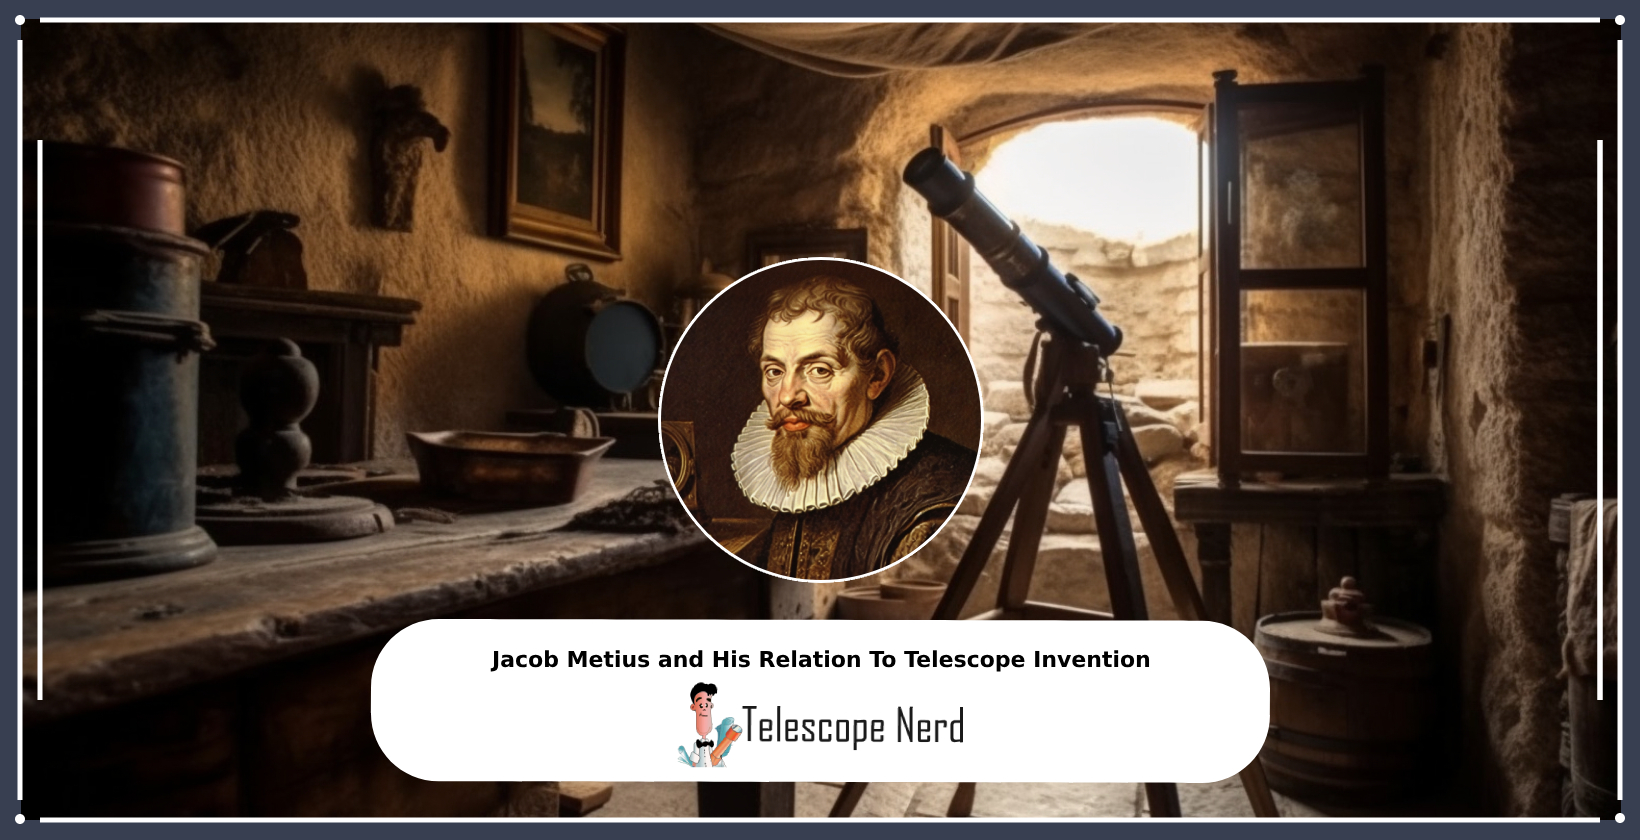 Jacob Metius astronomer and his contributions